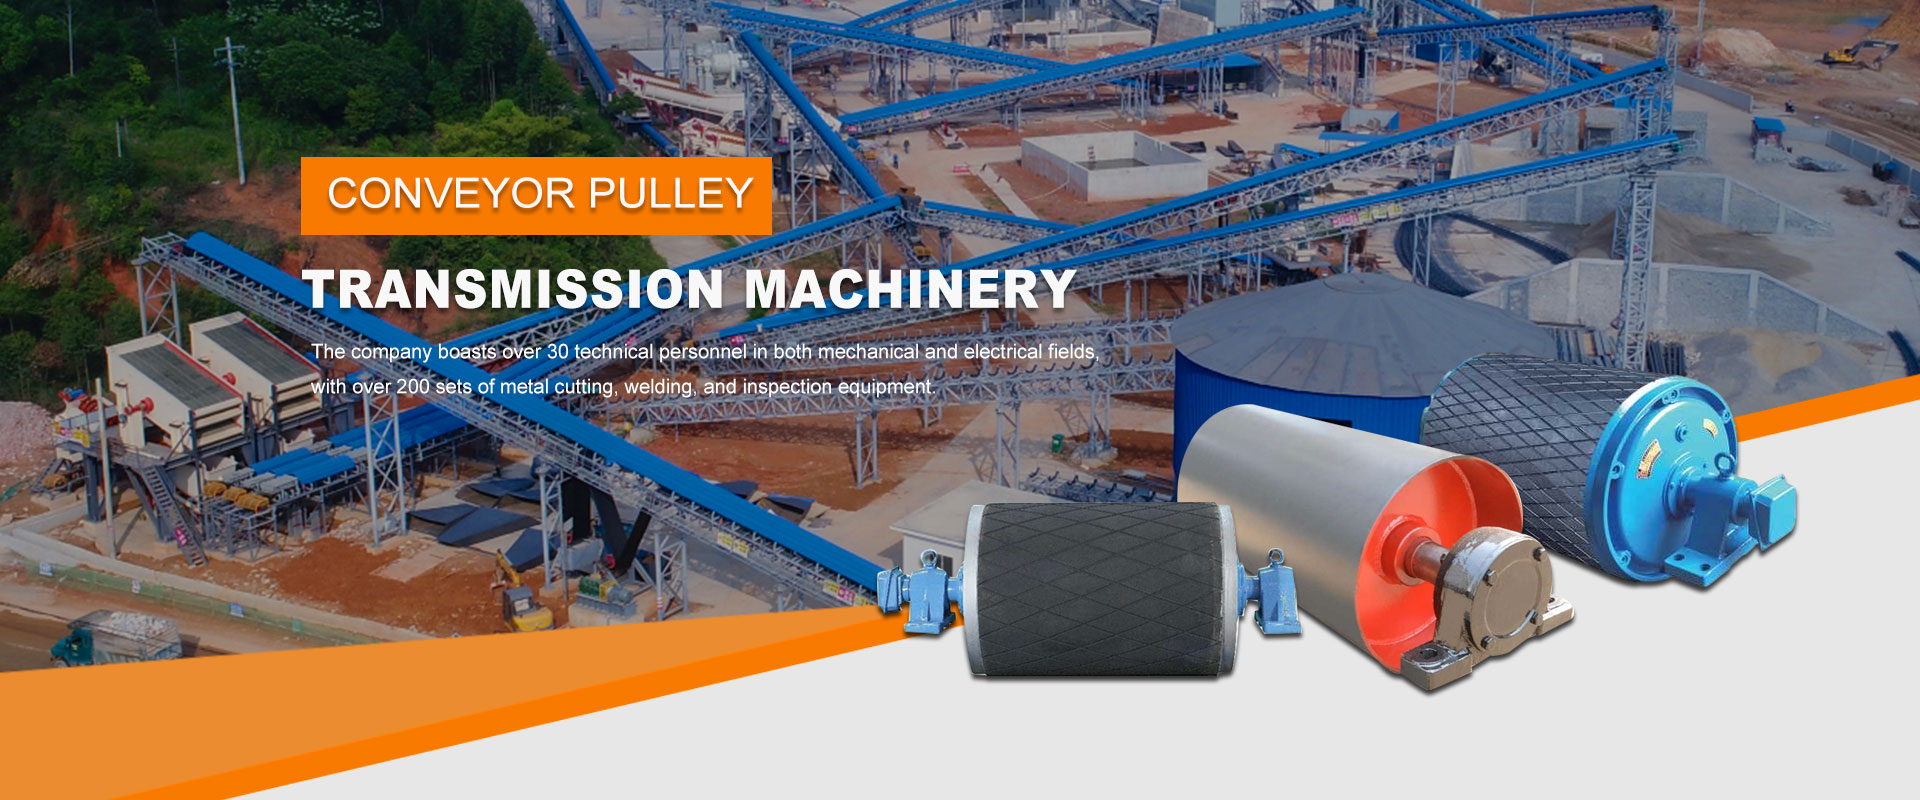 I-Conveyor Pulley Factory